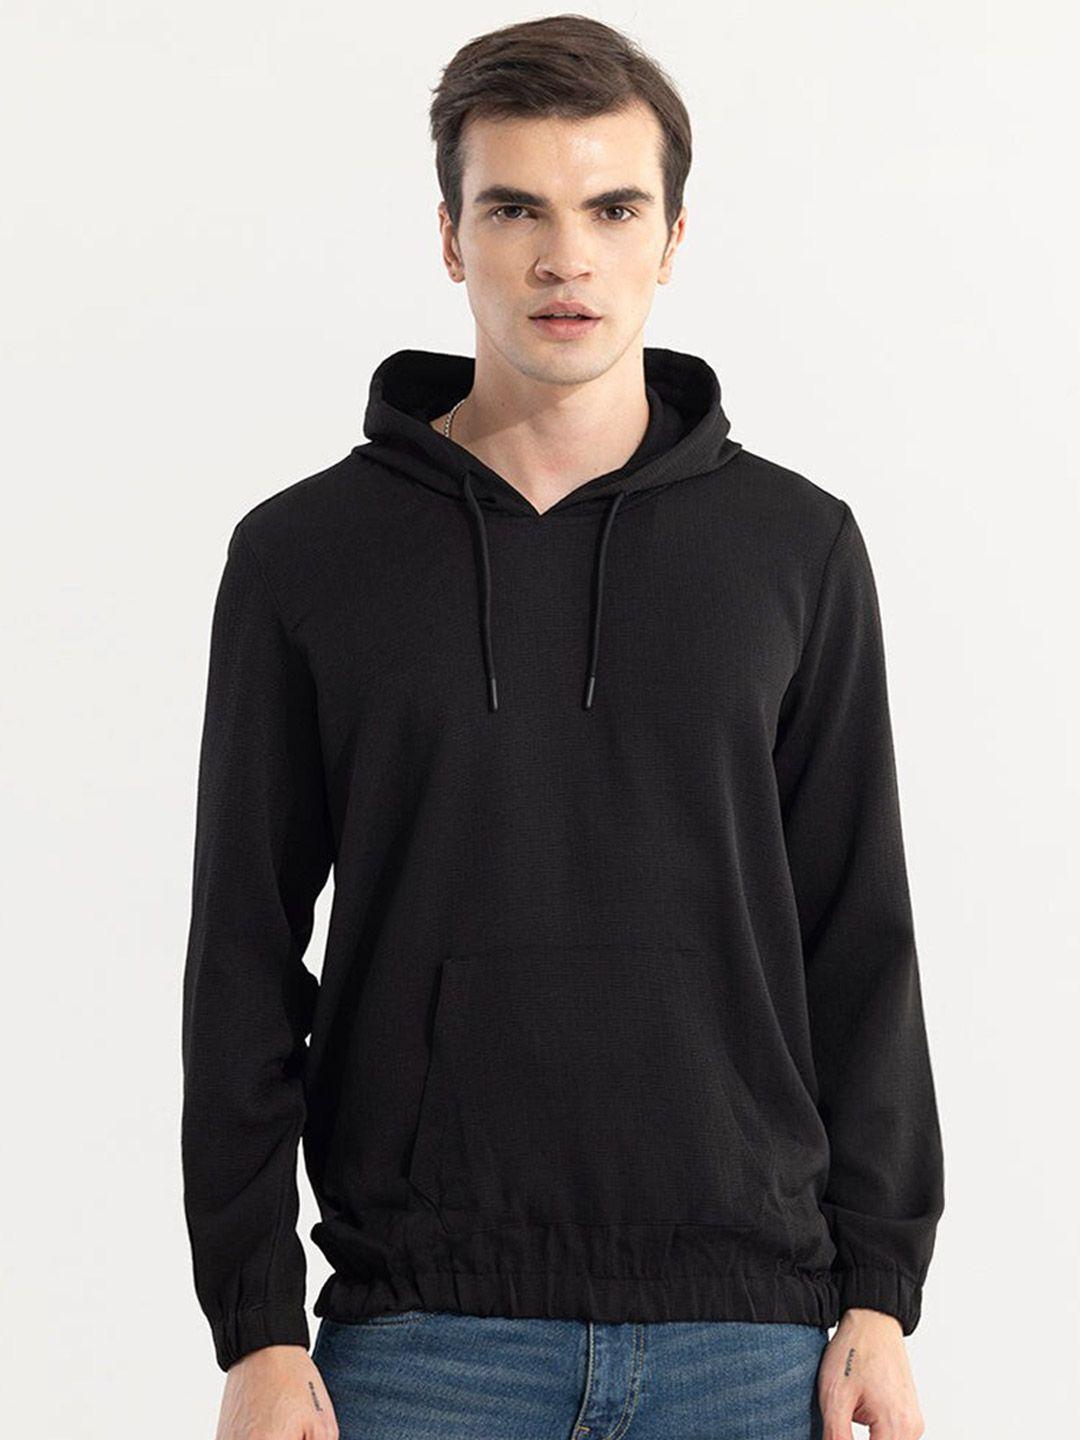 snitch-black-hooded-pullover-sweatshirt